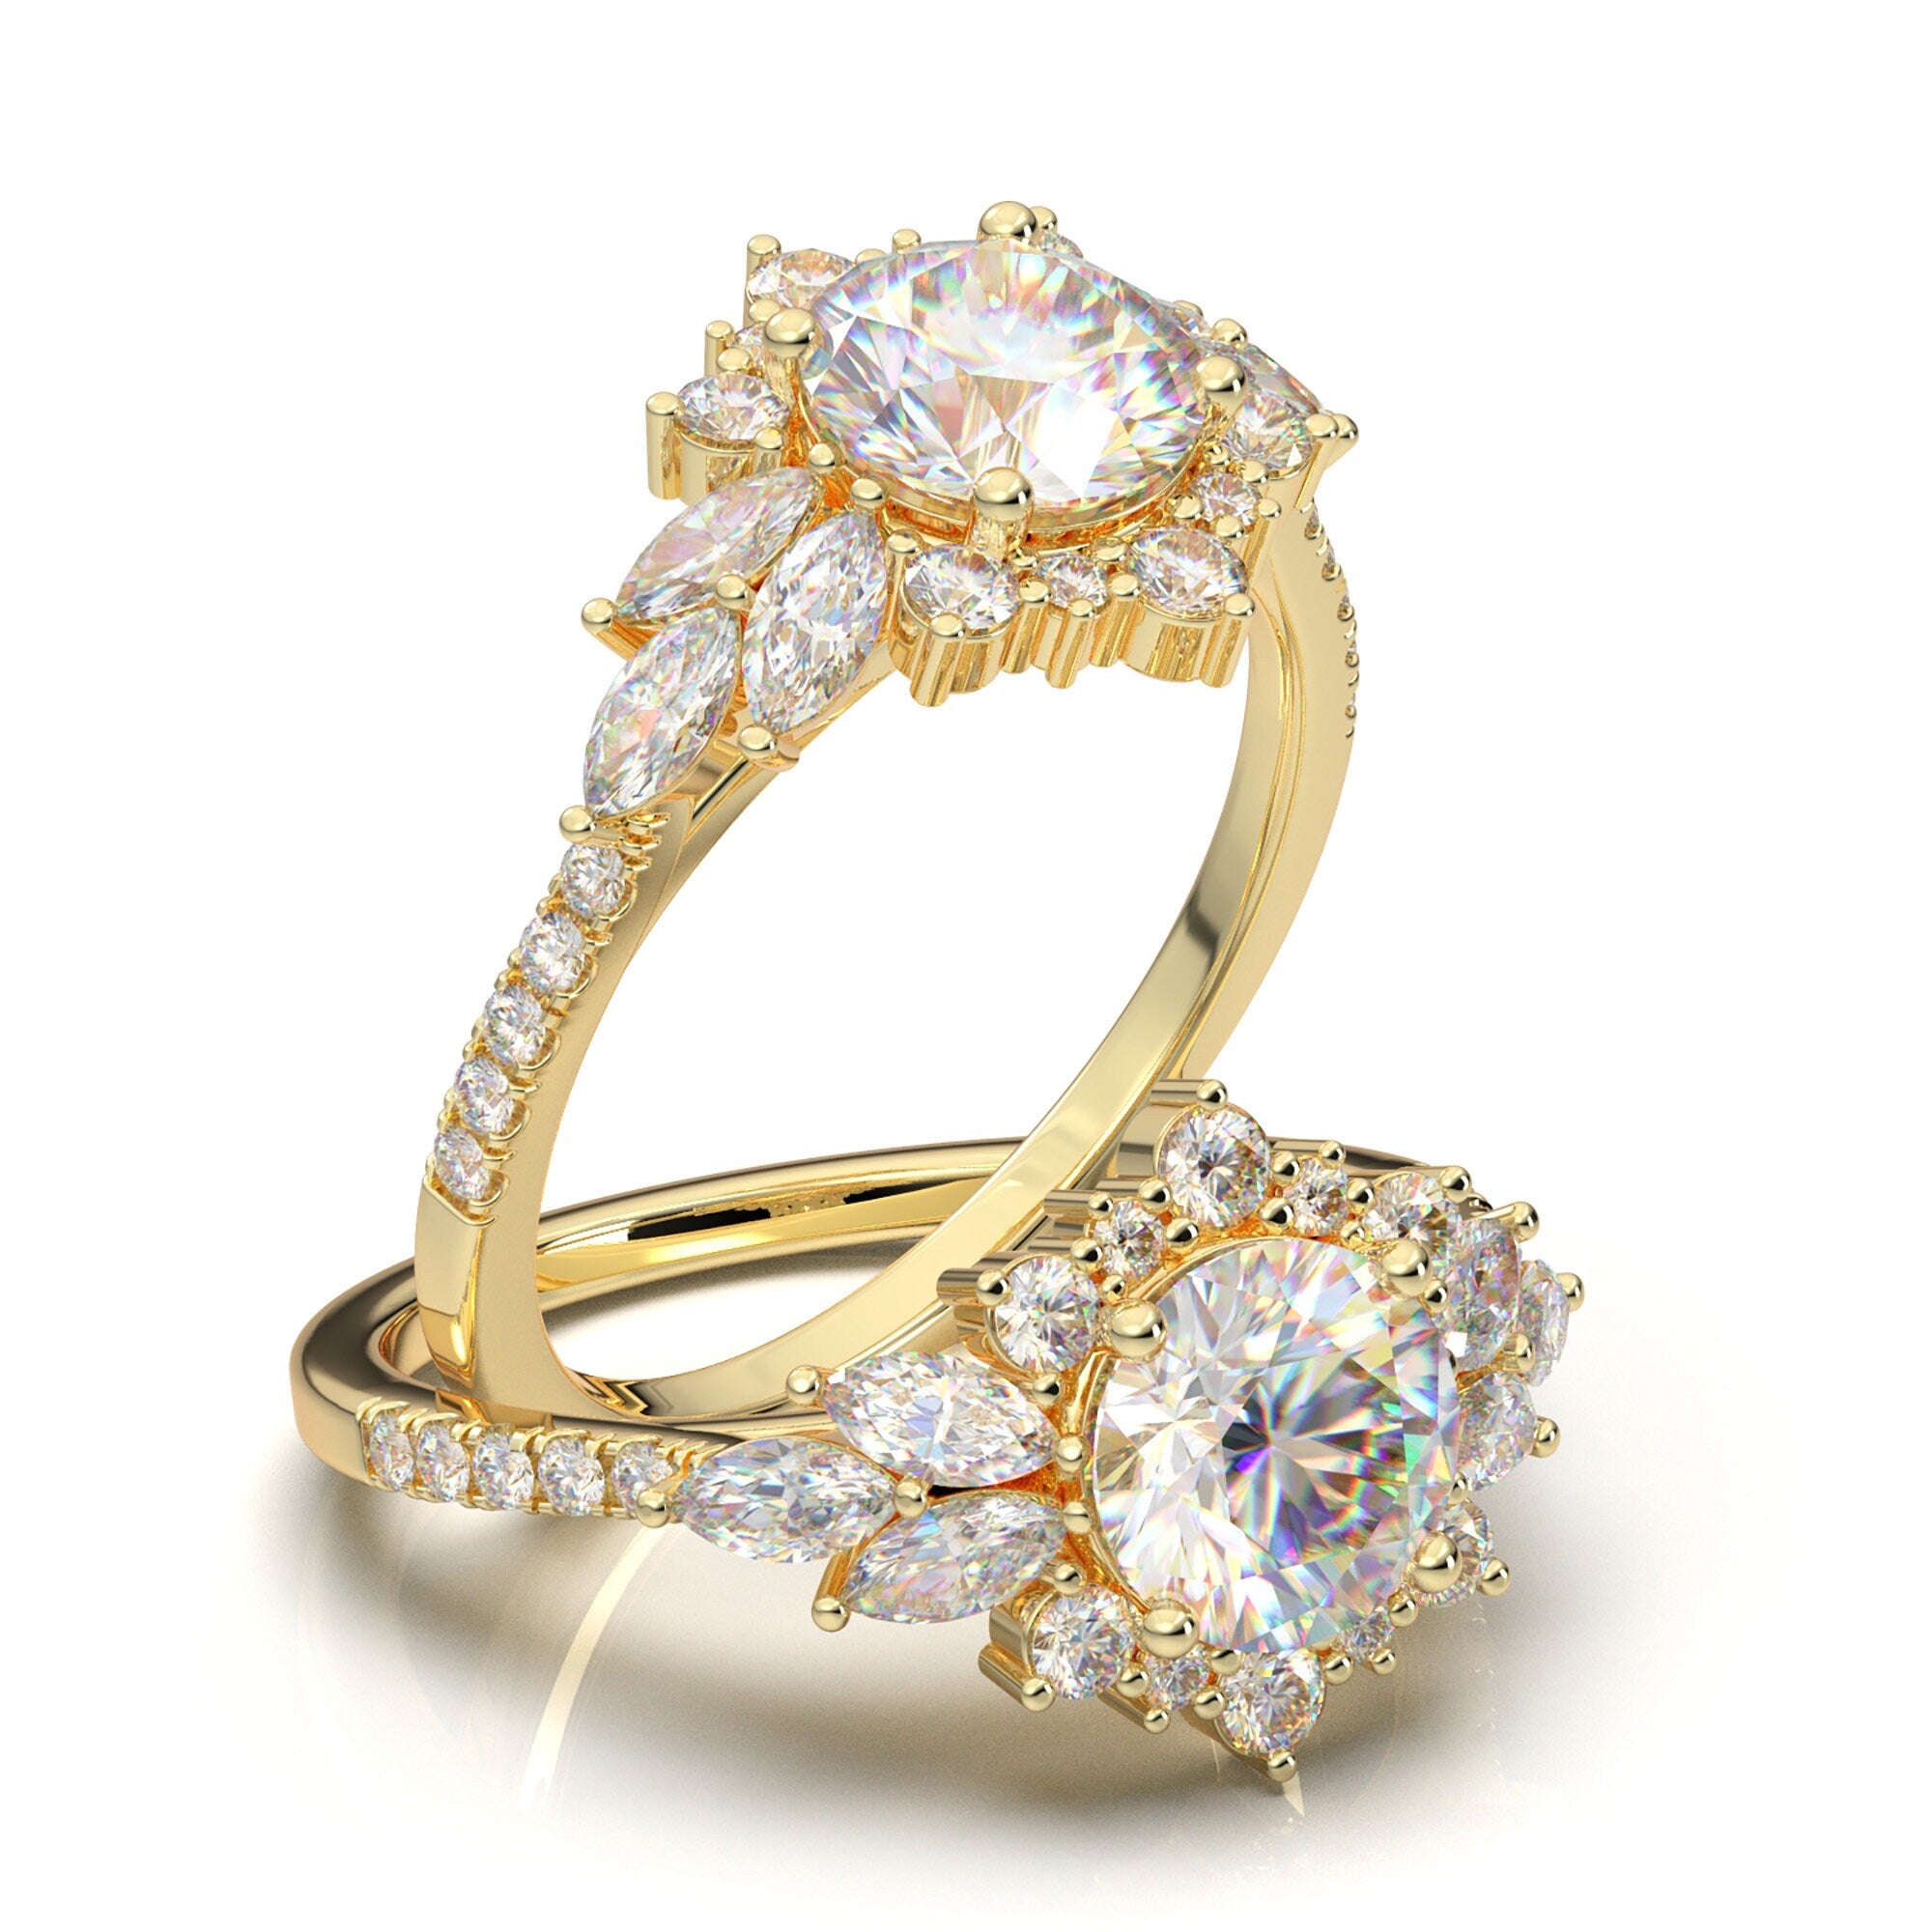 1 Carat Gold Engagement Ring, Yellow Gold Ring, Halo Engagement Ring